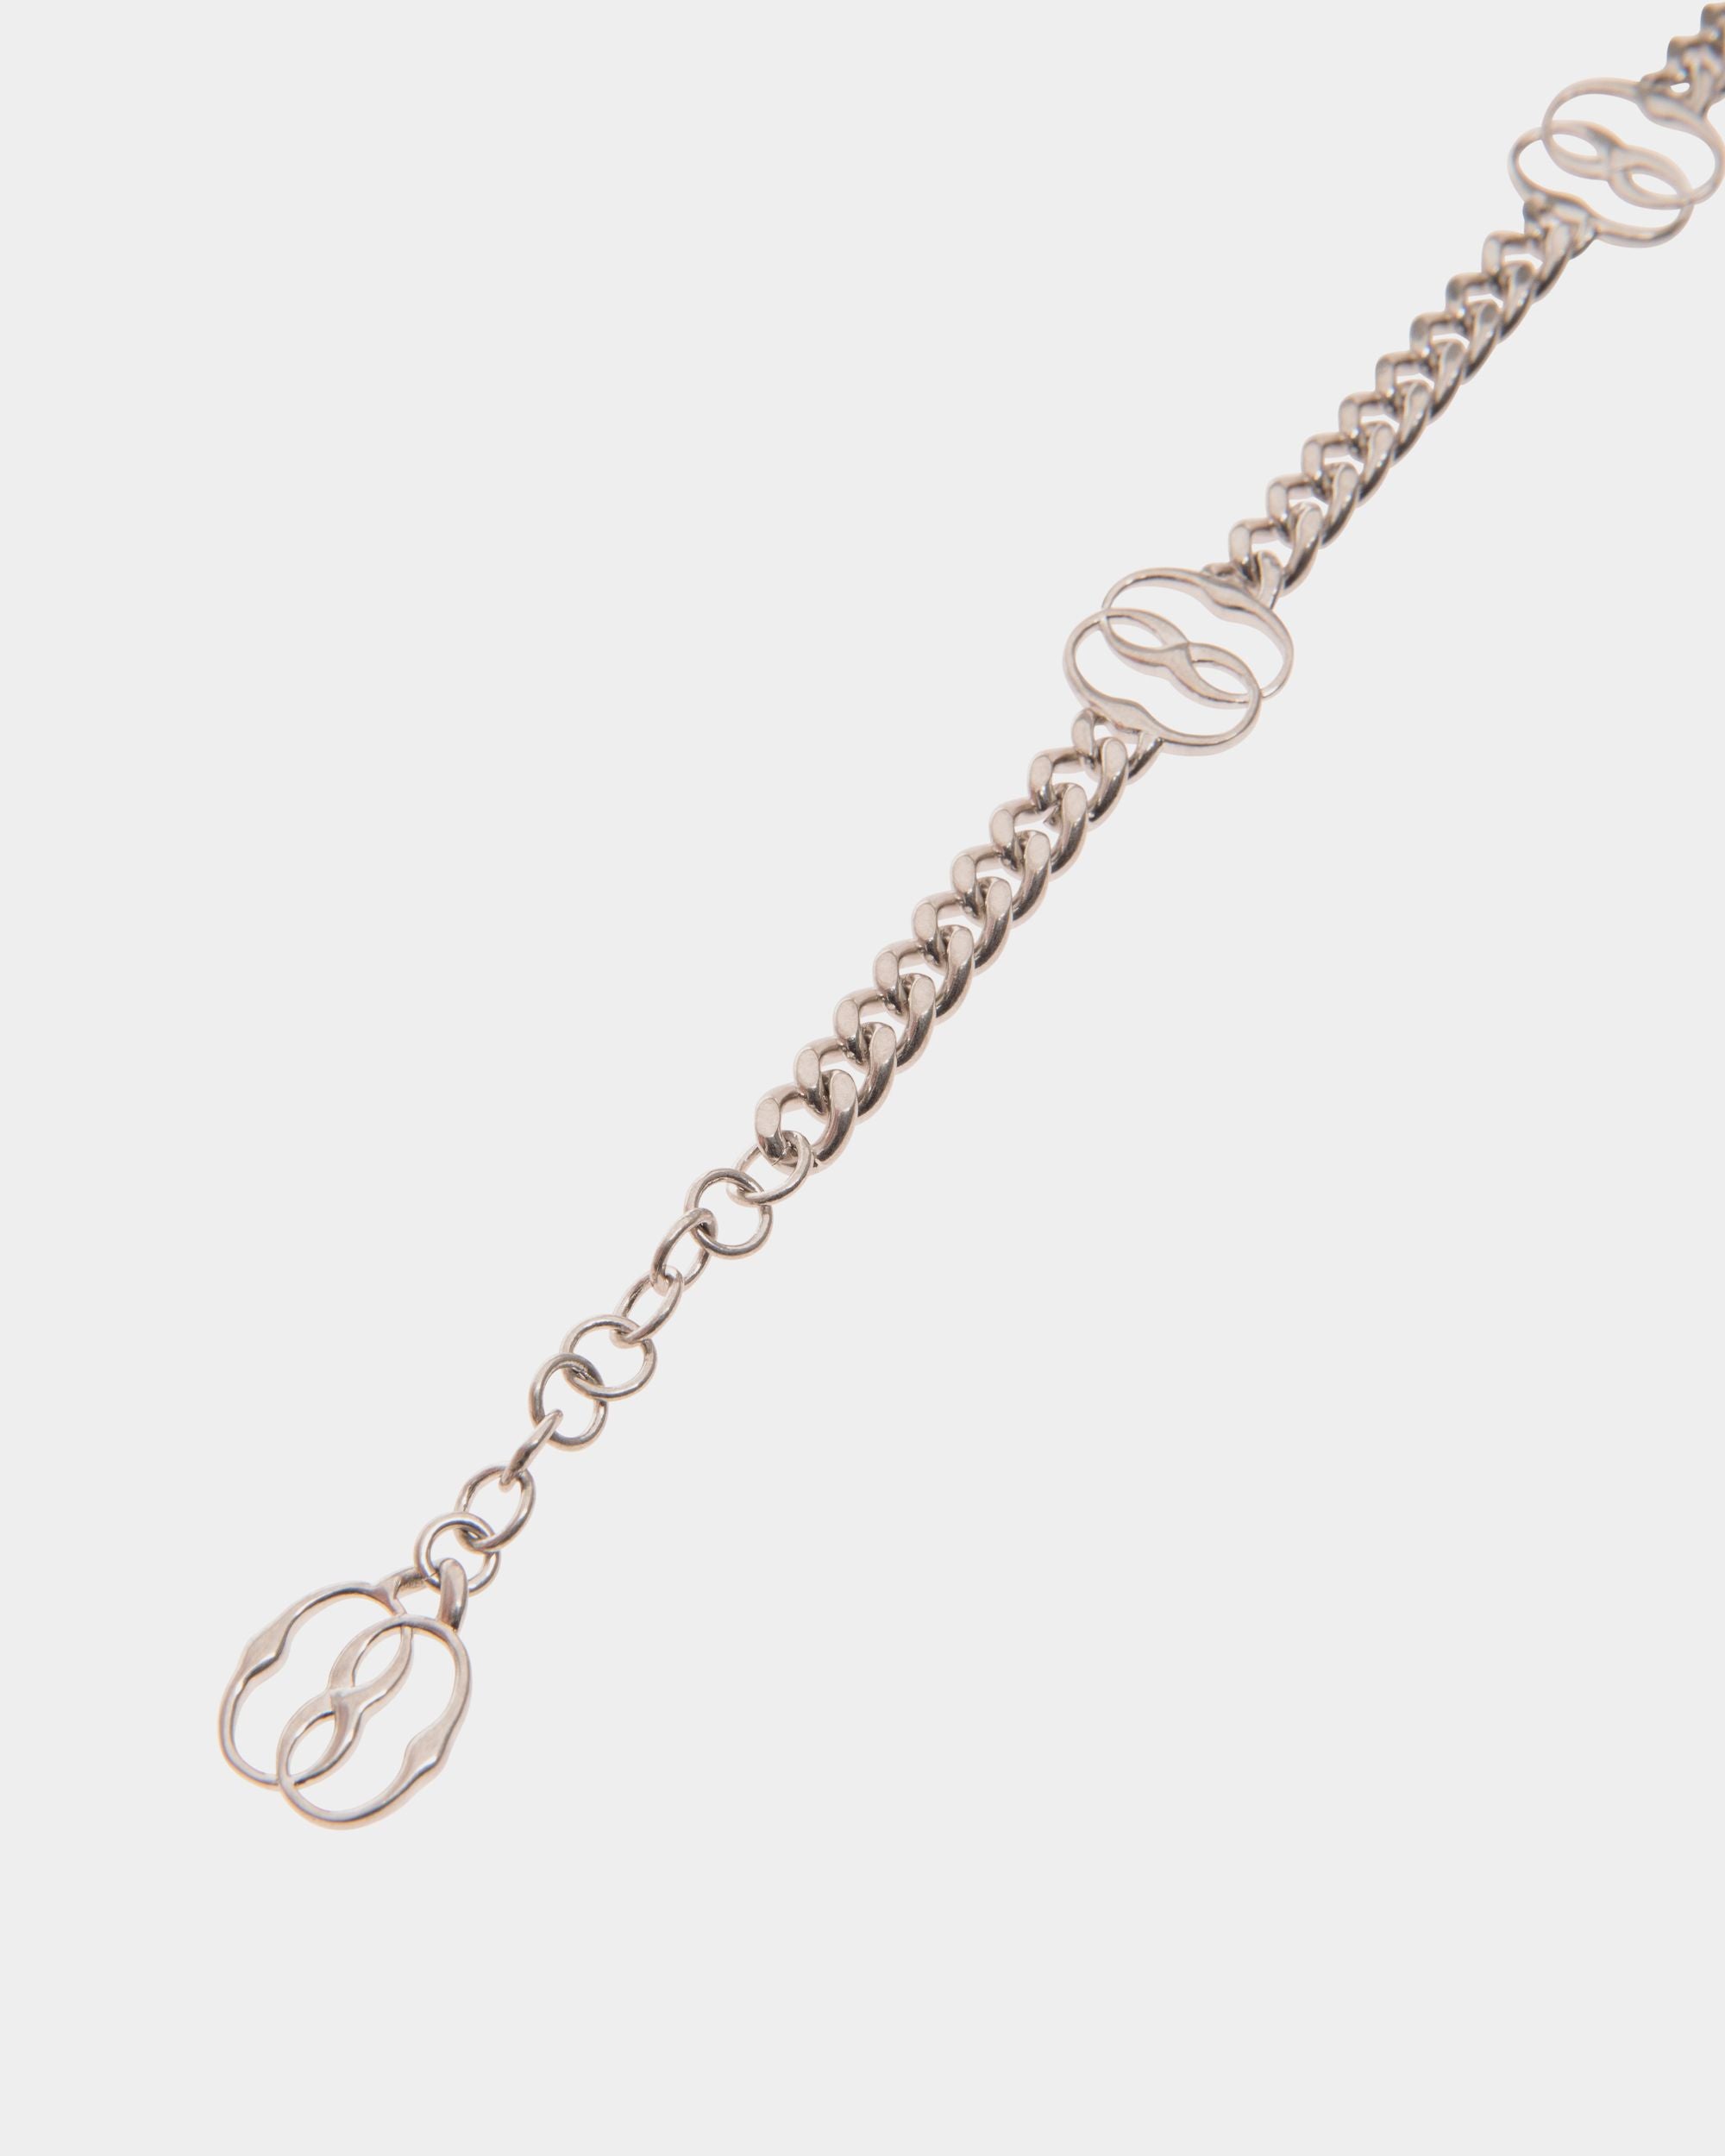 Emblem | Women's Bracelet in Silver Eco Brass | Bally | Still Life Detail